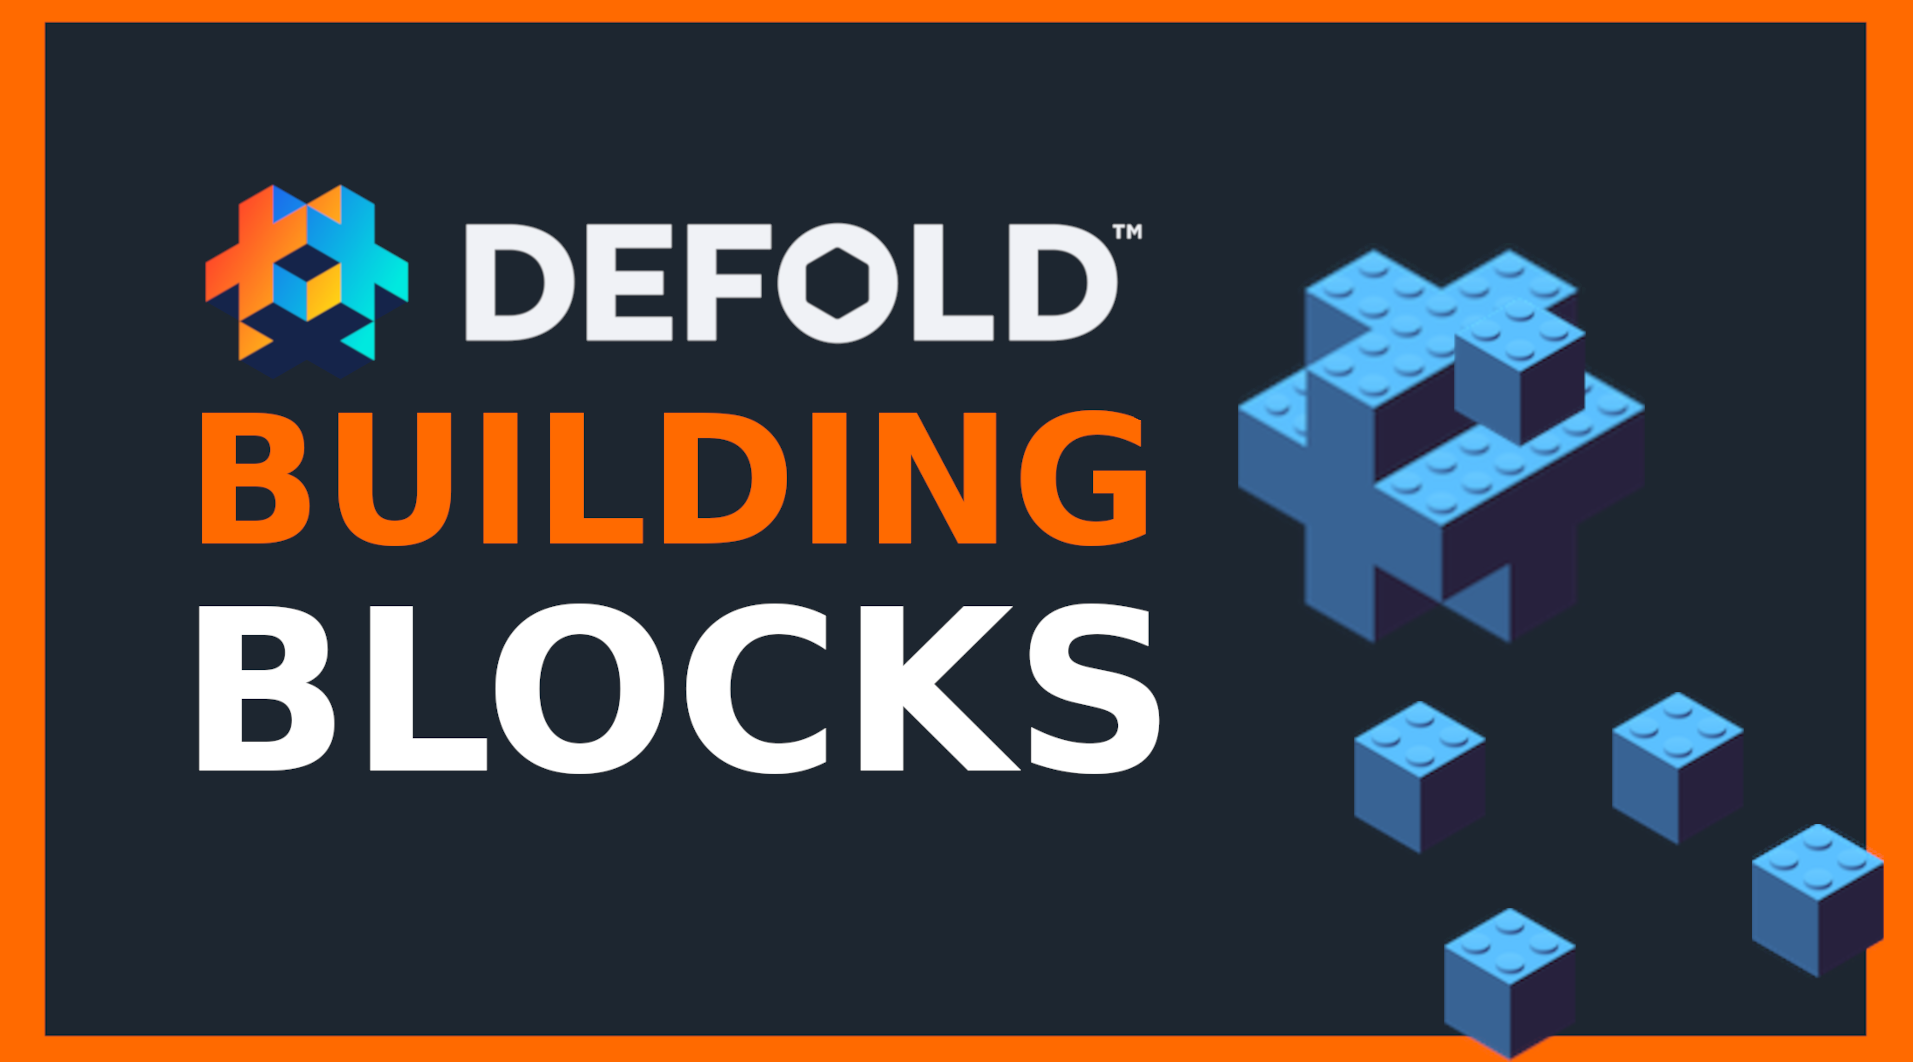 Defold Buidling Blocks - link to my YouTube video tutorial explaining fundamental knowledge for game development in Defold